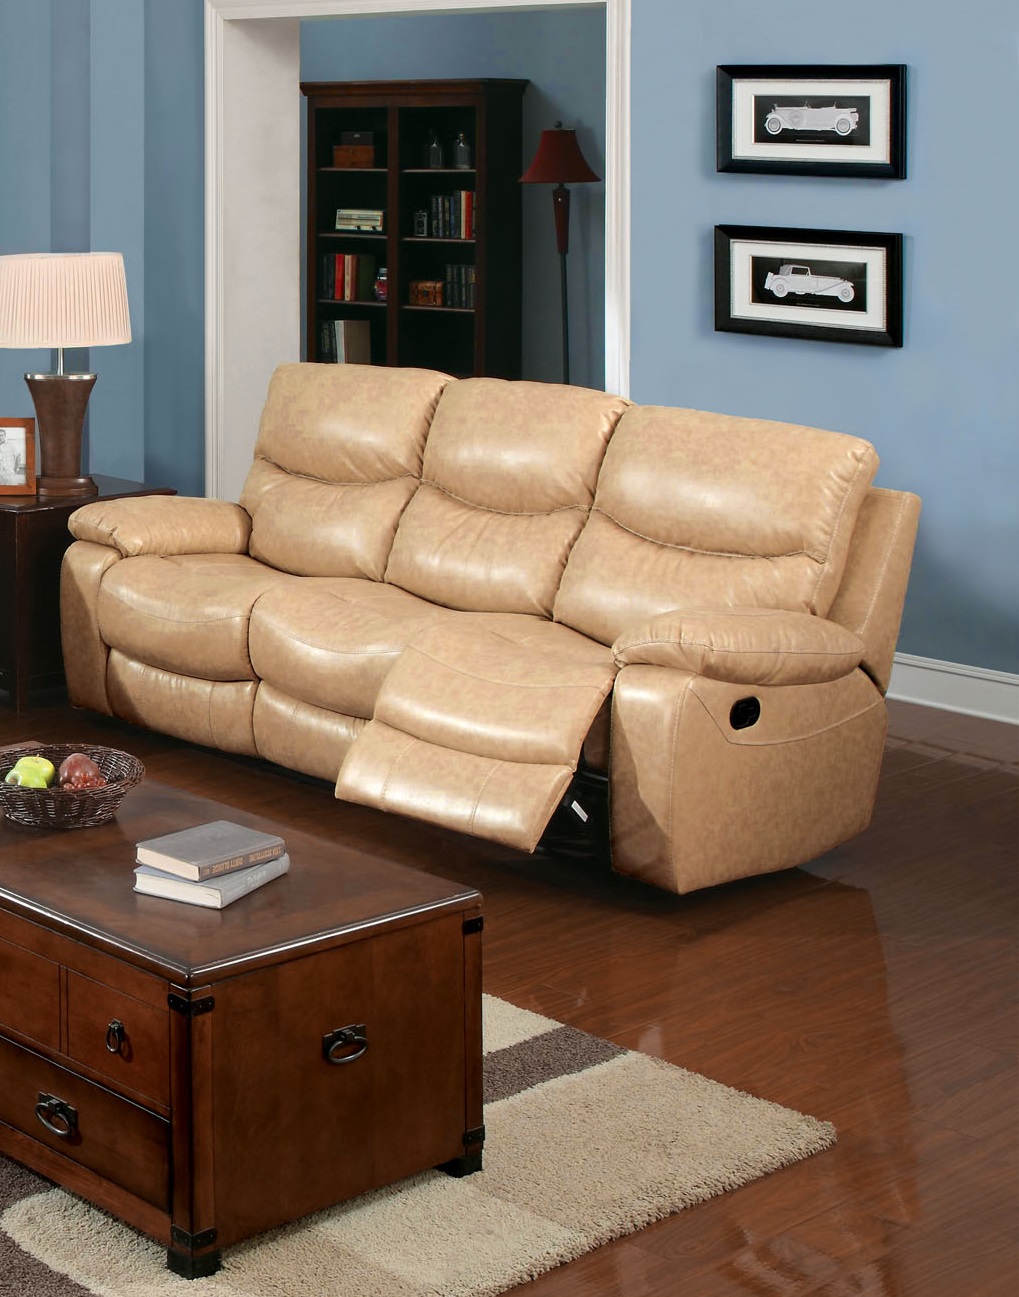 Furniture of America Manila Camel Bonded Leather Match Recliner Sofa